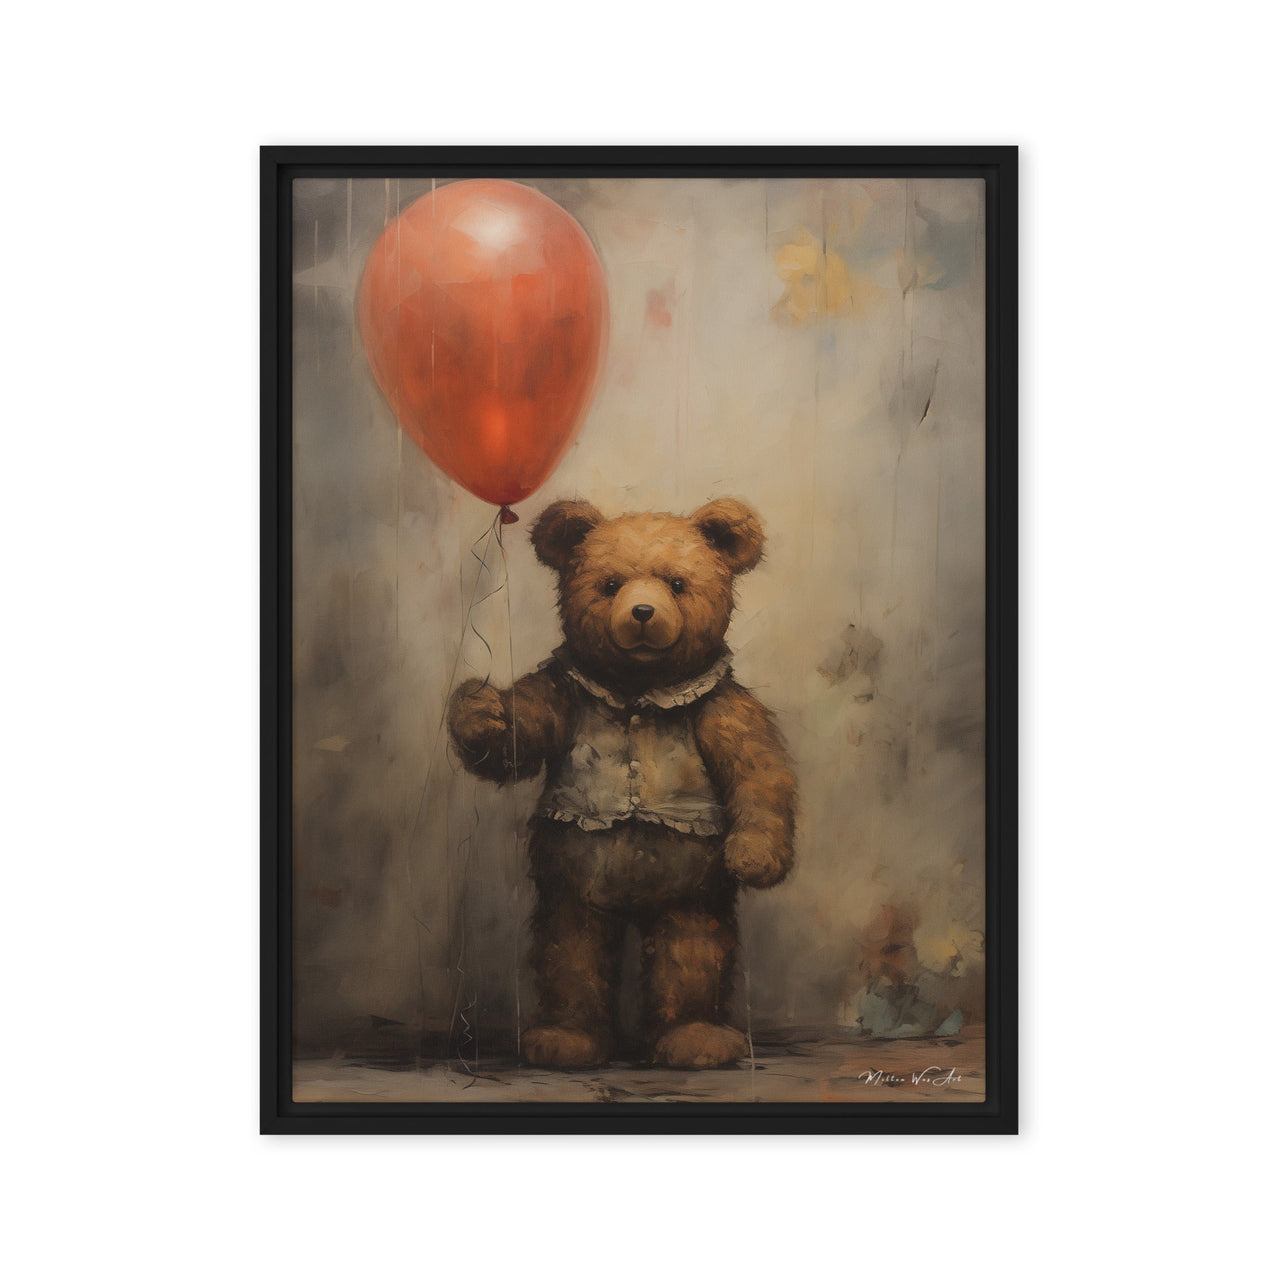 Encaustic Oil Print: Teddy Bear with Red Balloon Framed Canvas - Pine Tree Frame - Milton Wes Art Framed Wall Art